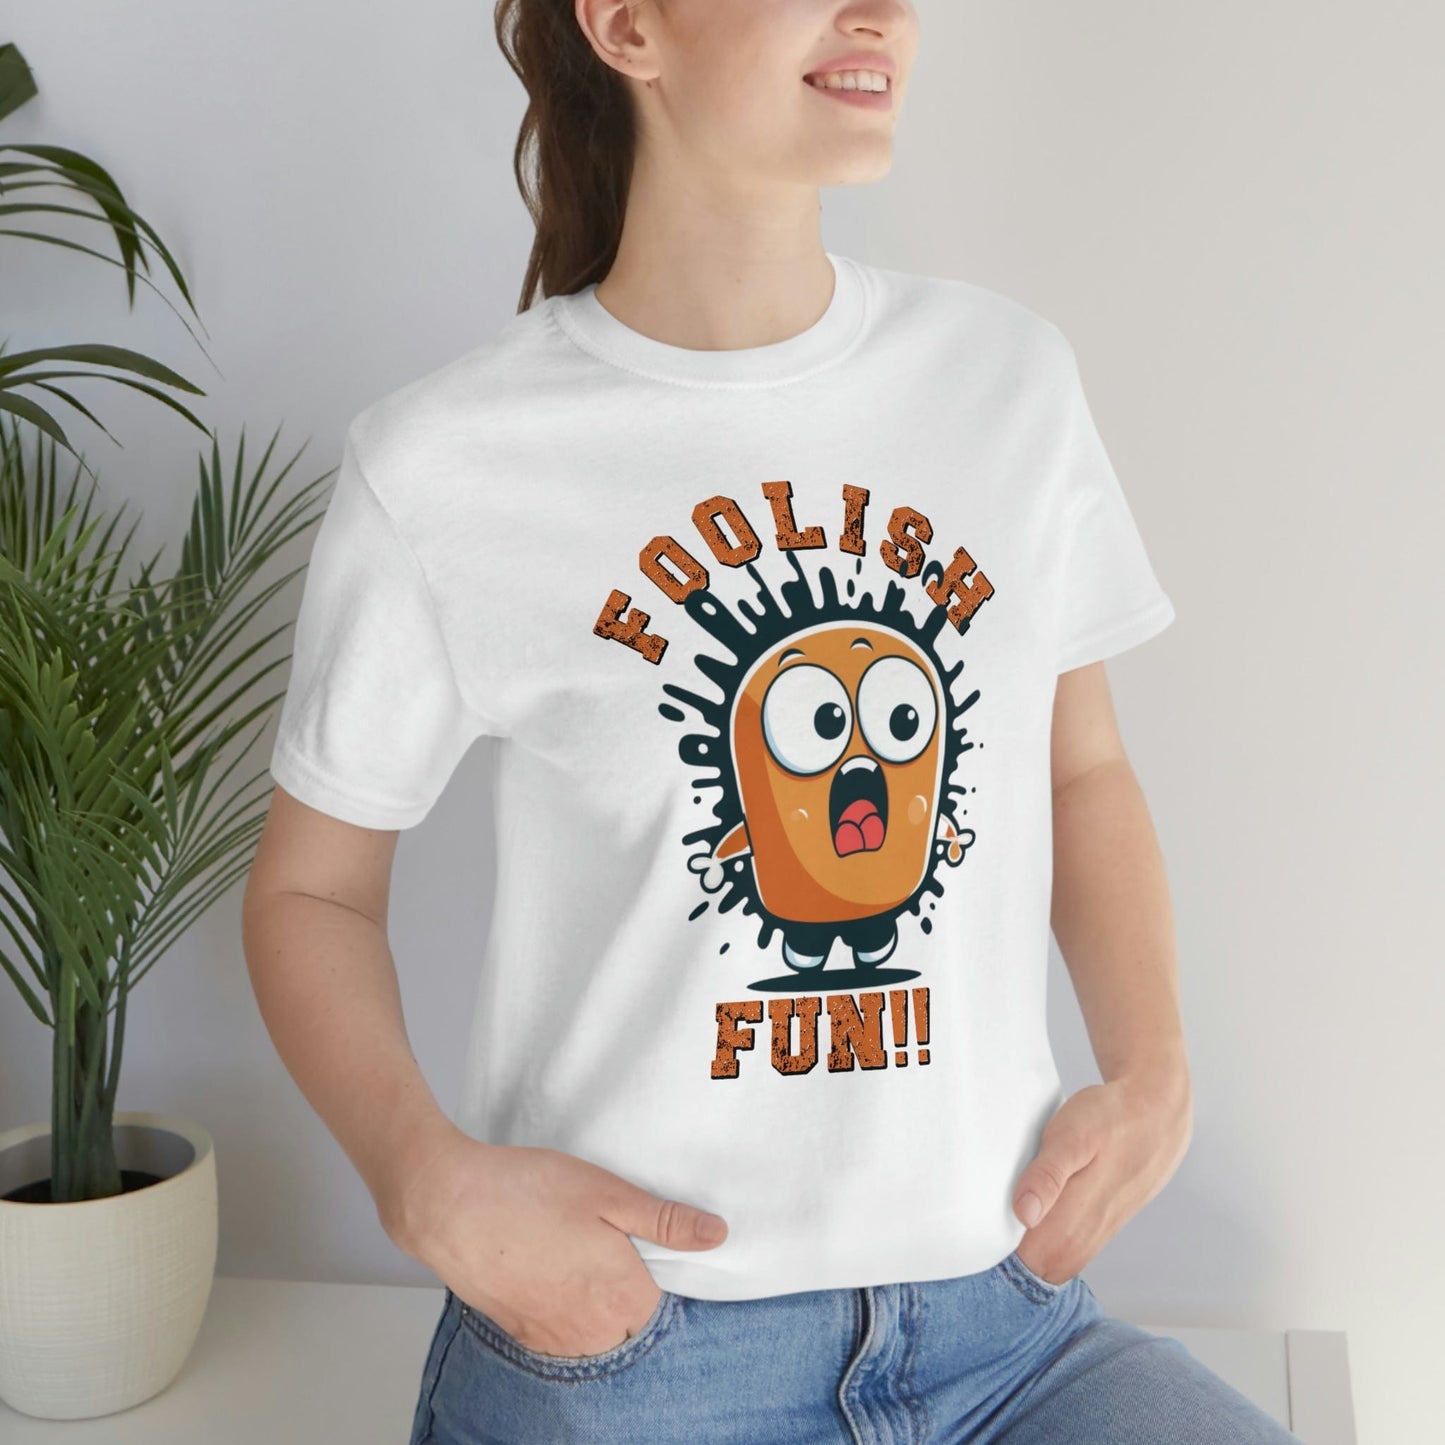 2023 Unisex Foolilsh Fun Prankster Lover Squad pranks Quote April Fool's Day Joke Humor Comedy Sayings Sarcastic T-Shirt